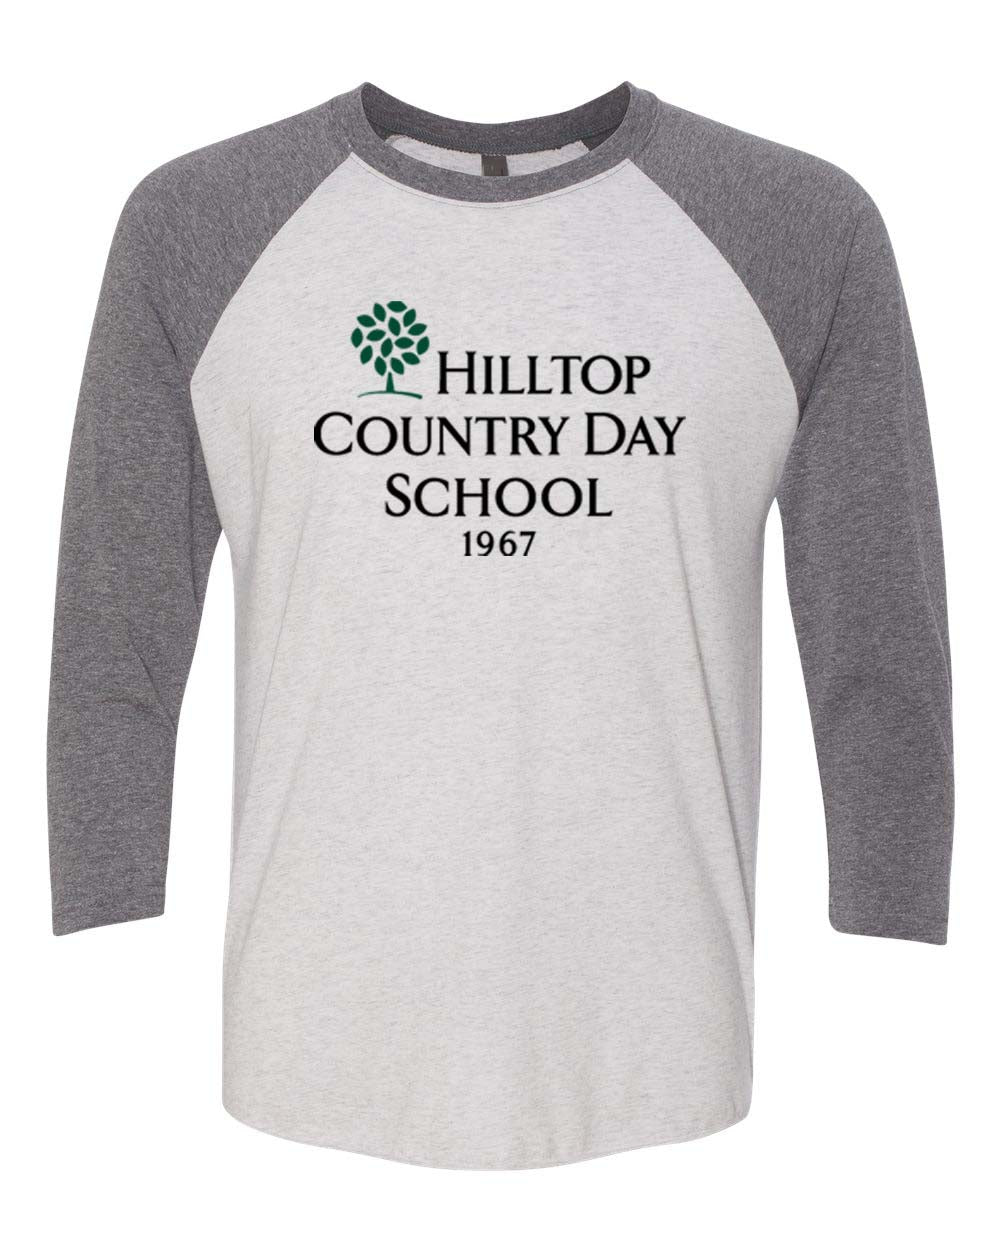 Hilltop Country Day School design 2 raglan shirt